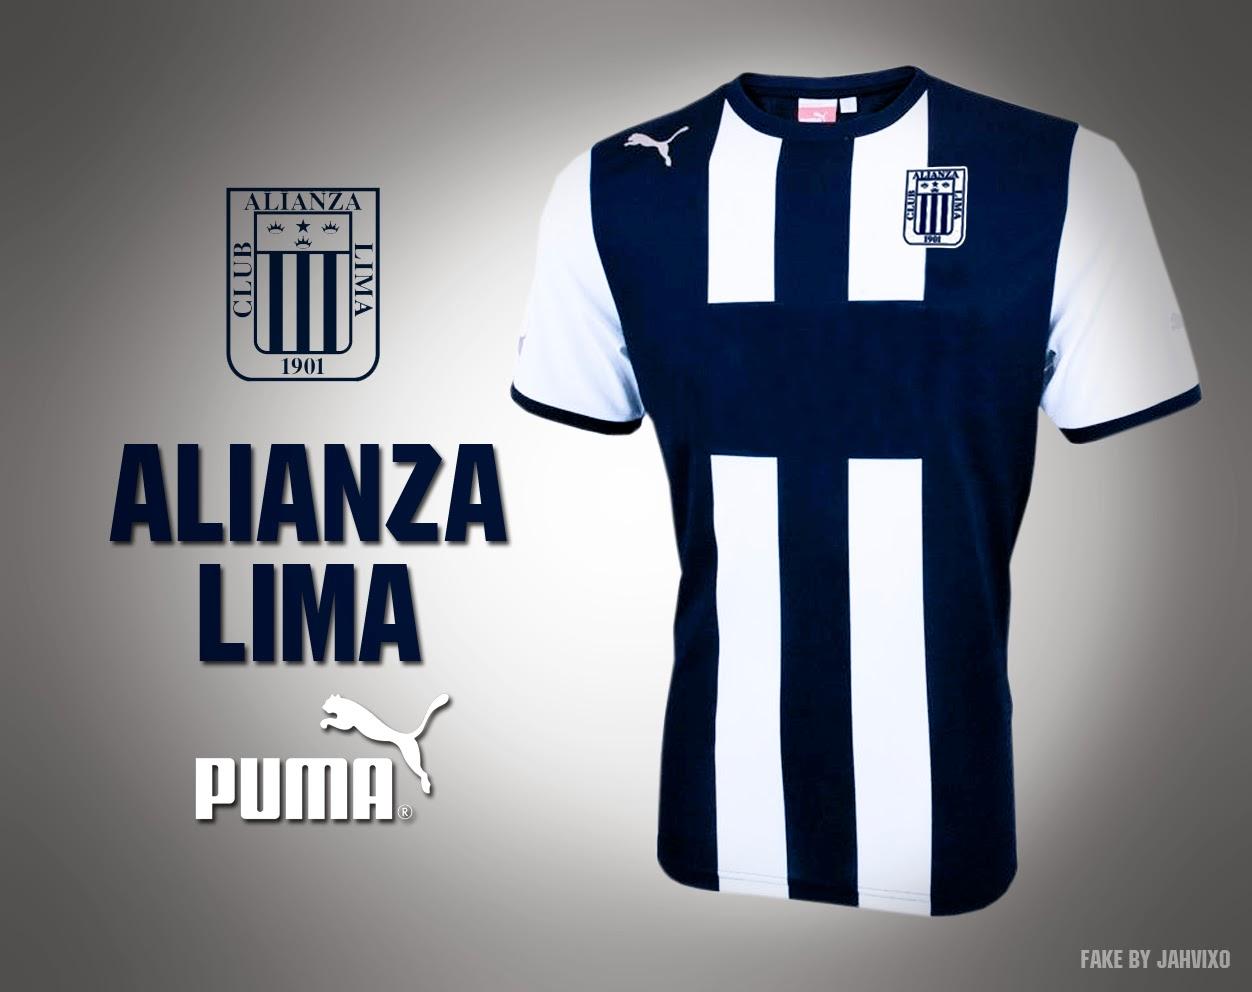 jahv art&desing: Alianza Lima Puma Jersey